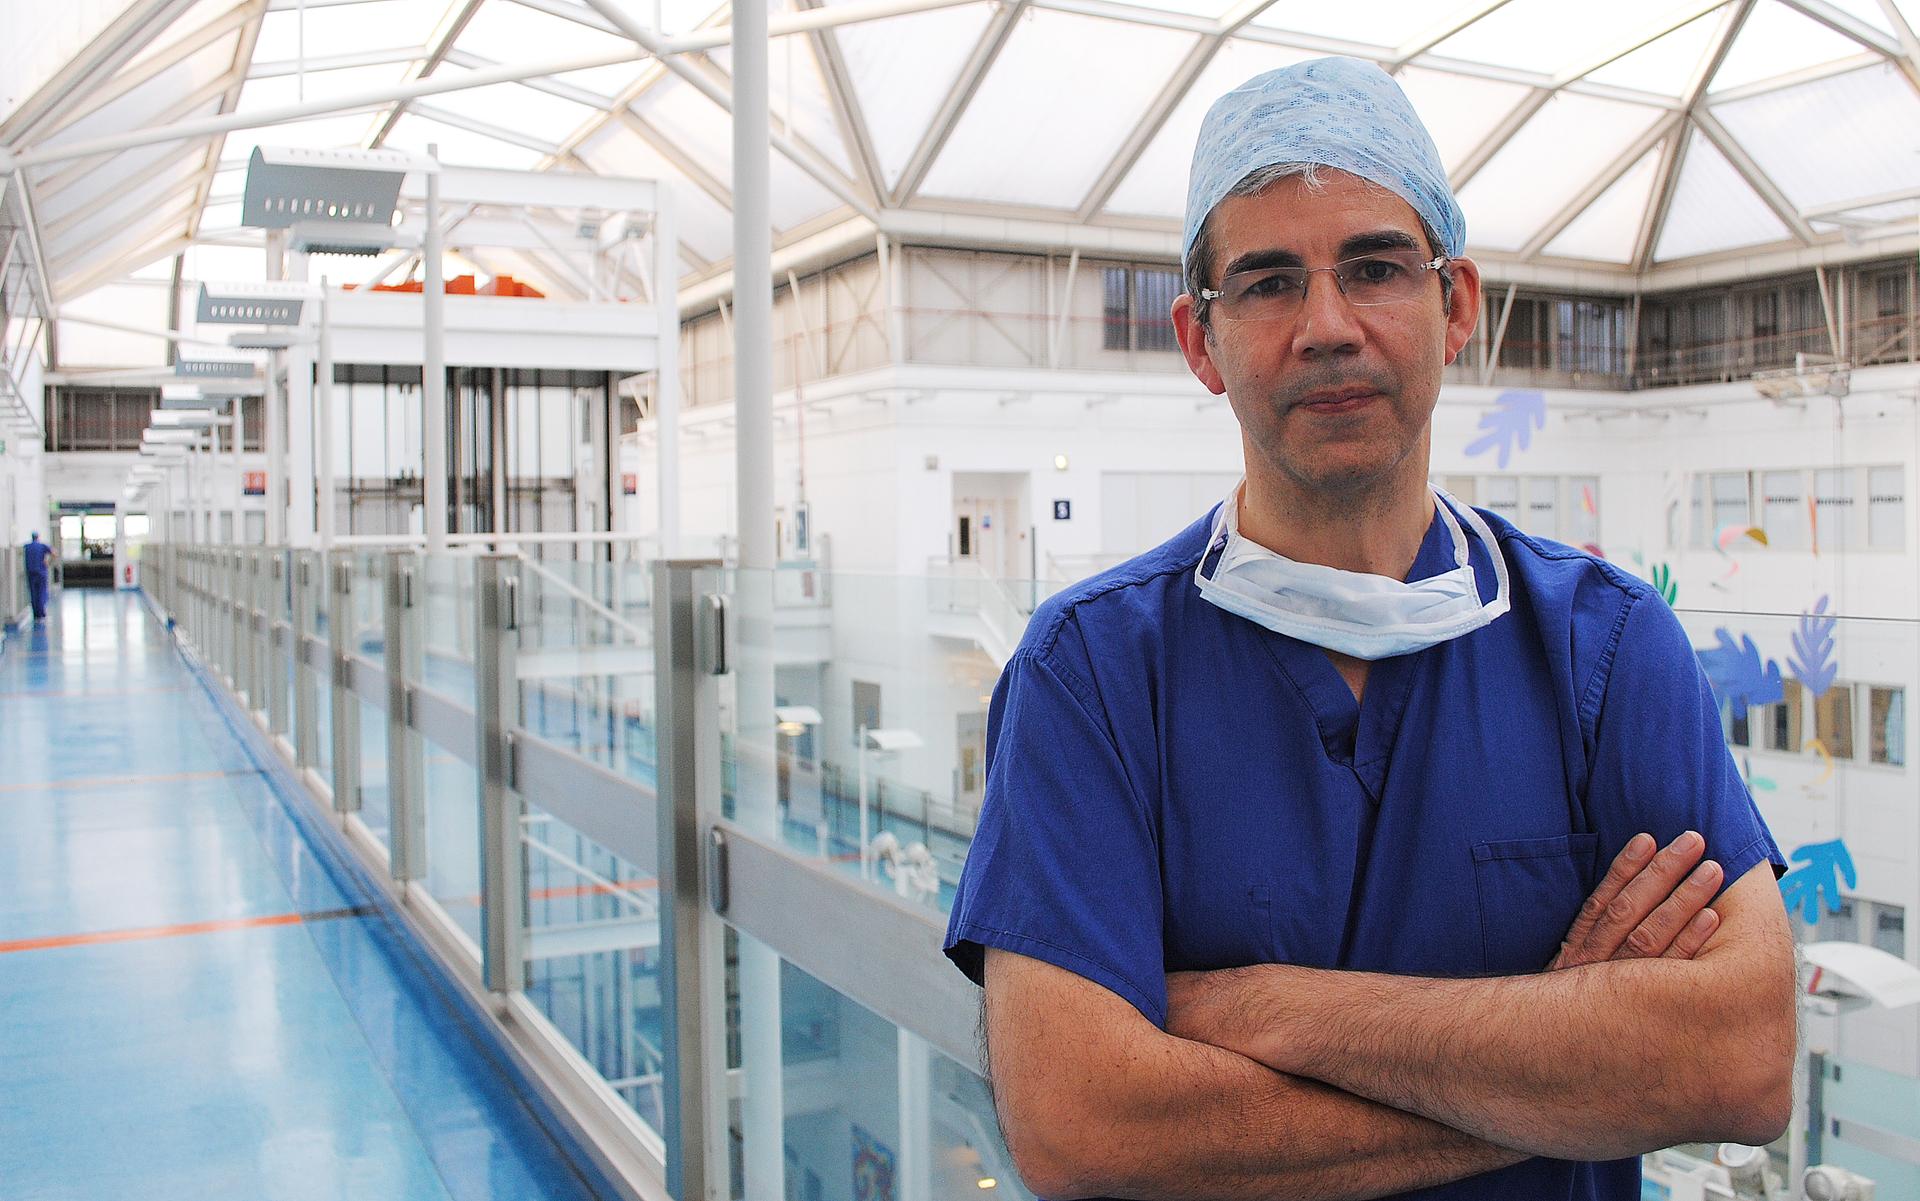 UK surgeon David Nott